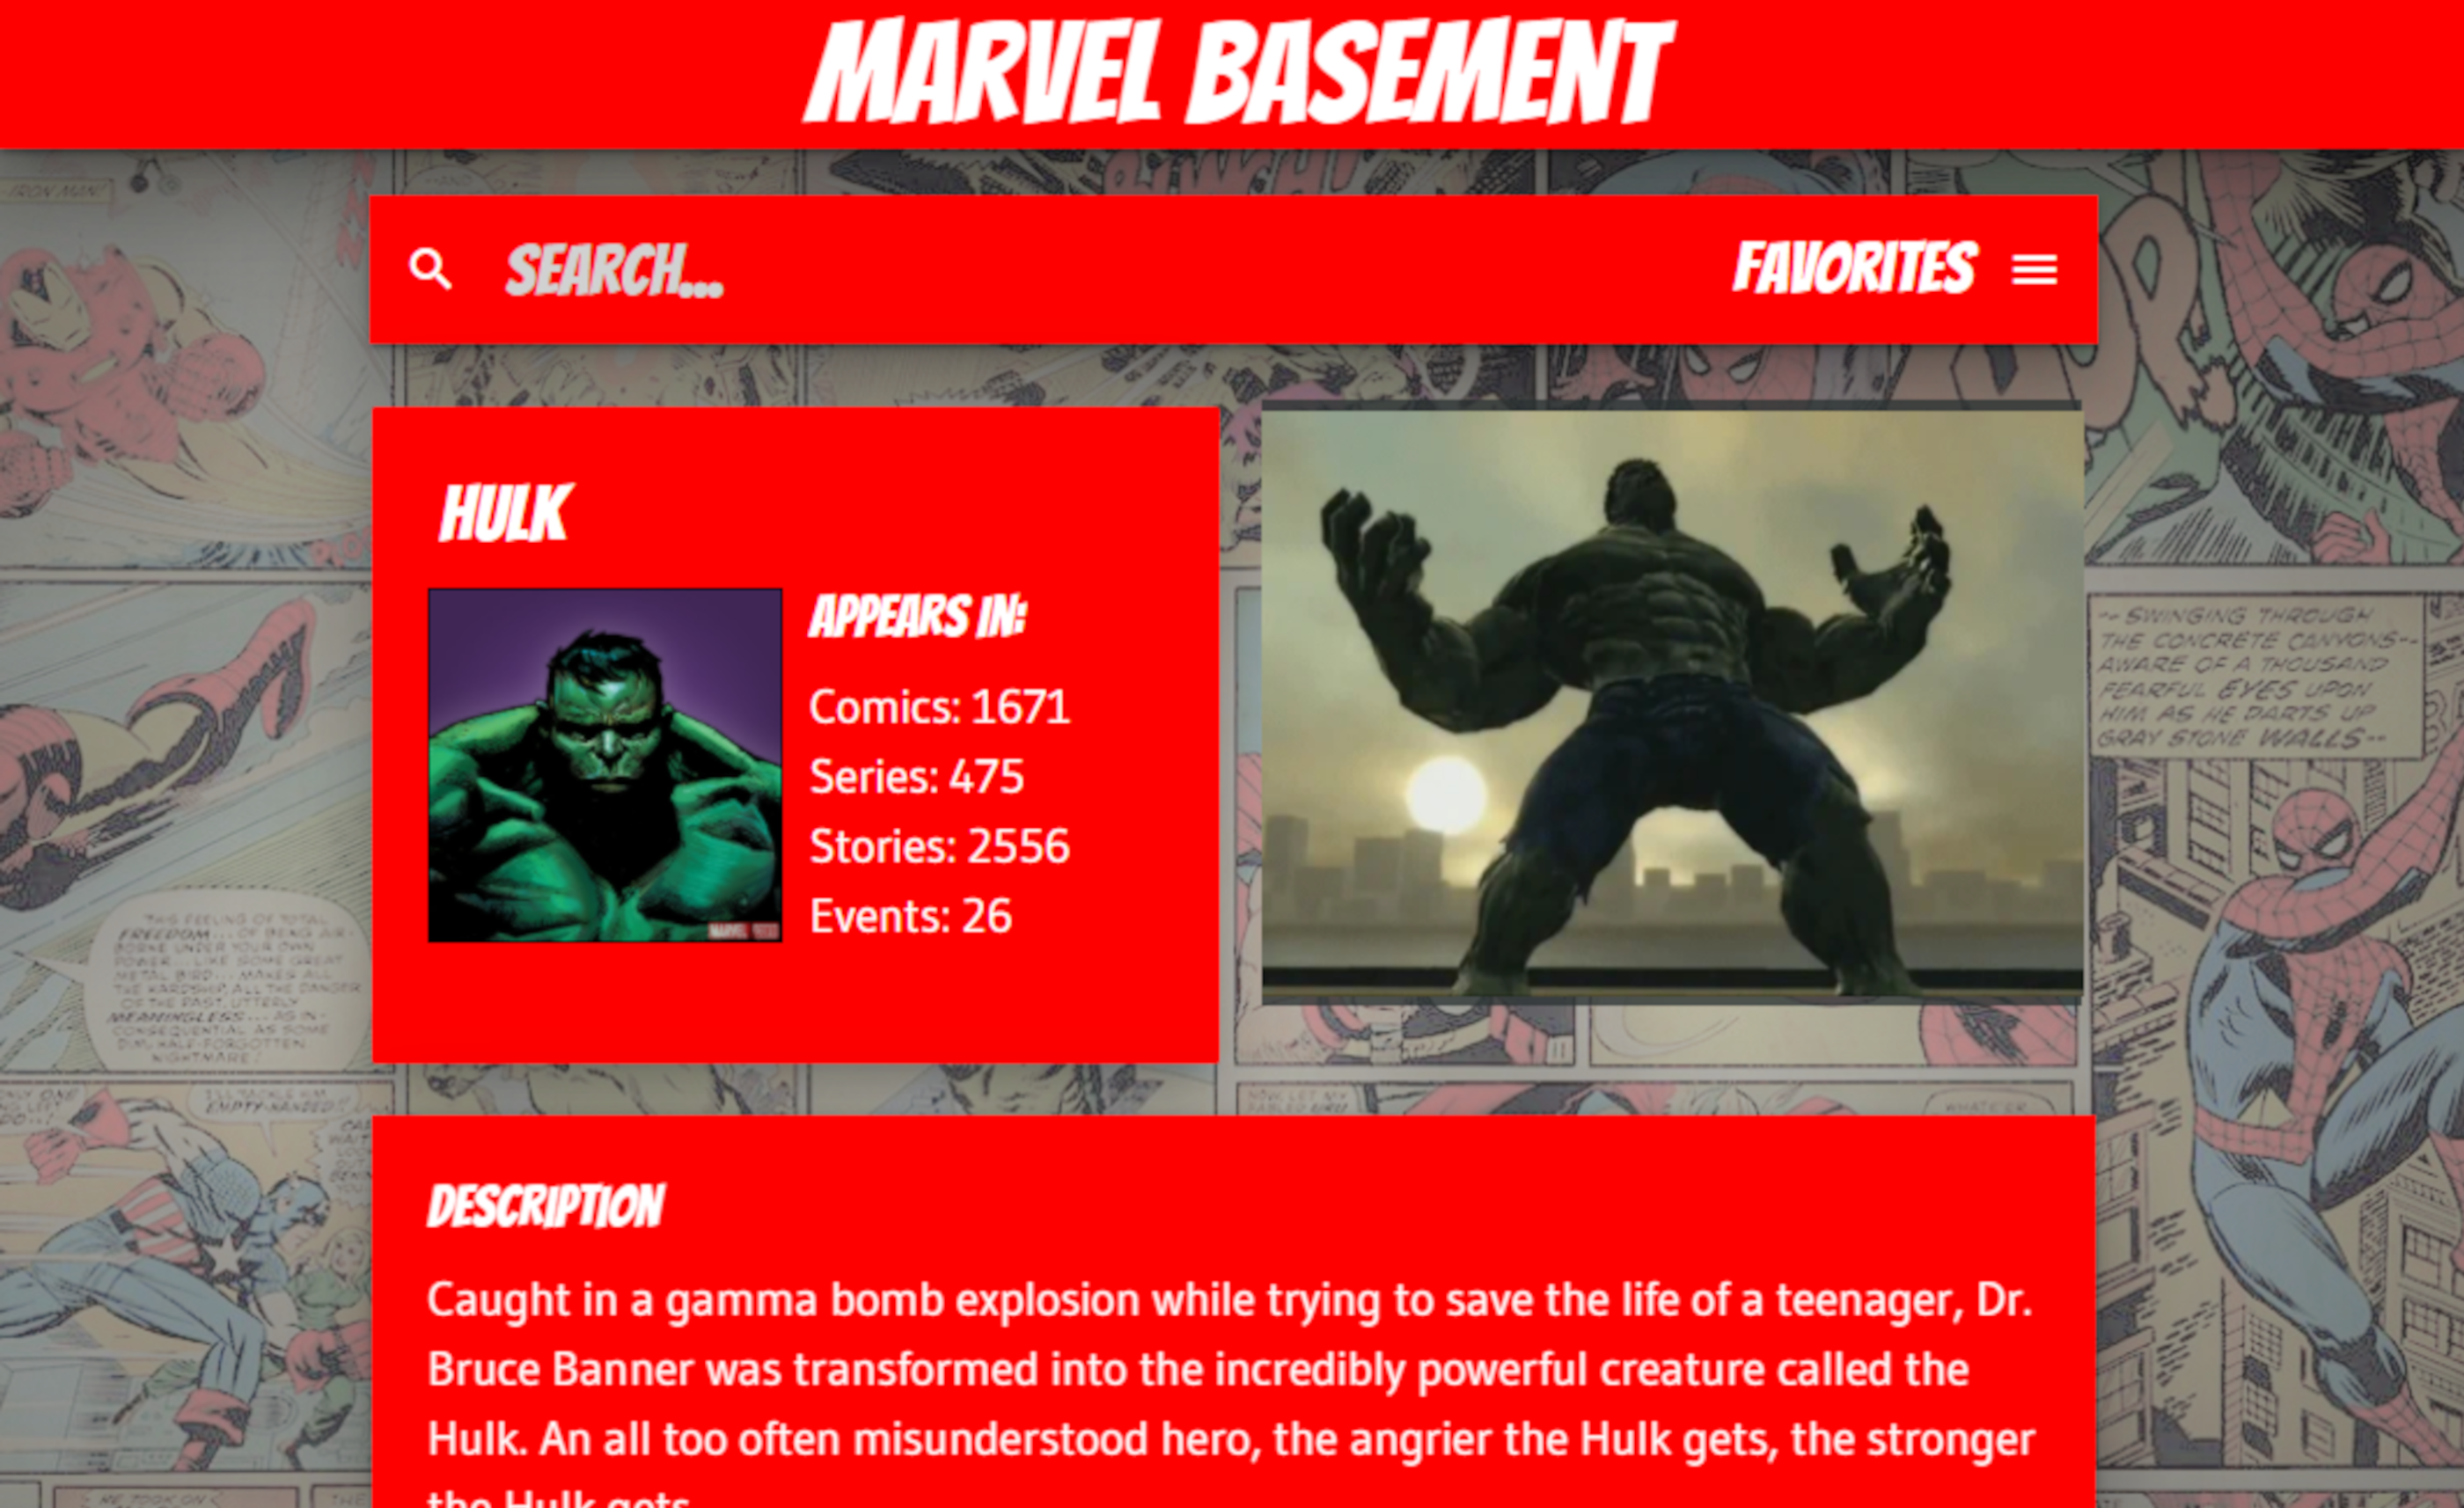 Marvel Basement Project